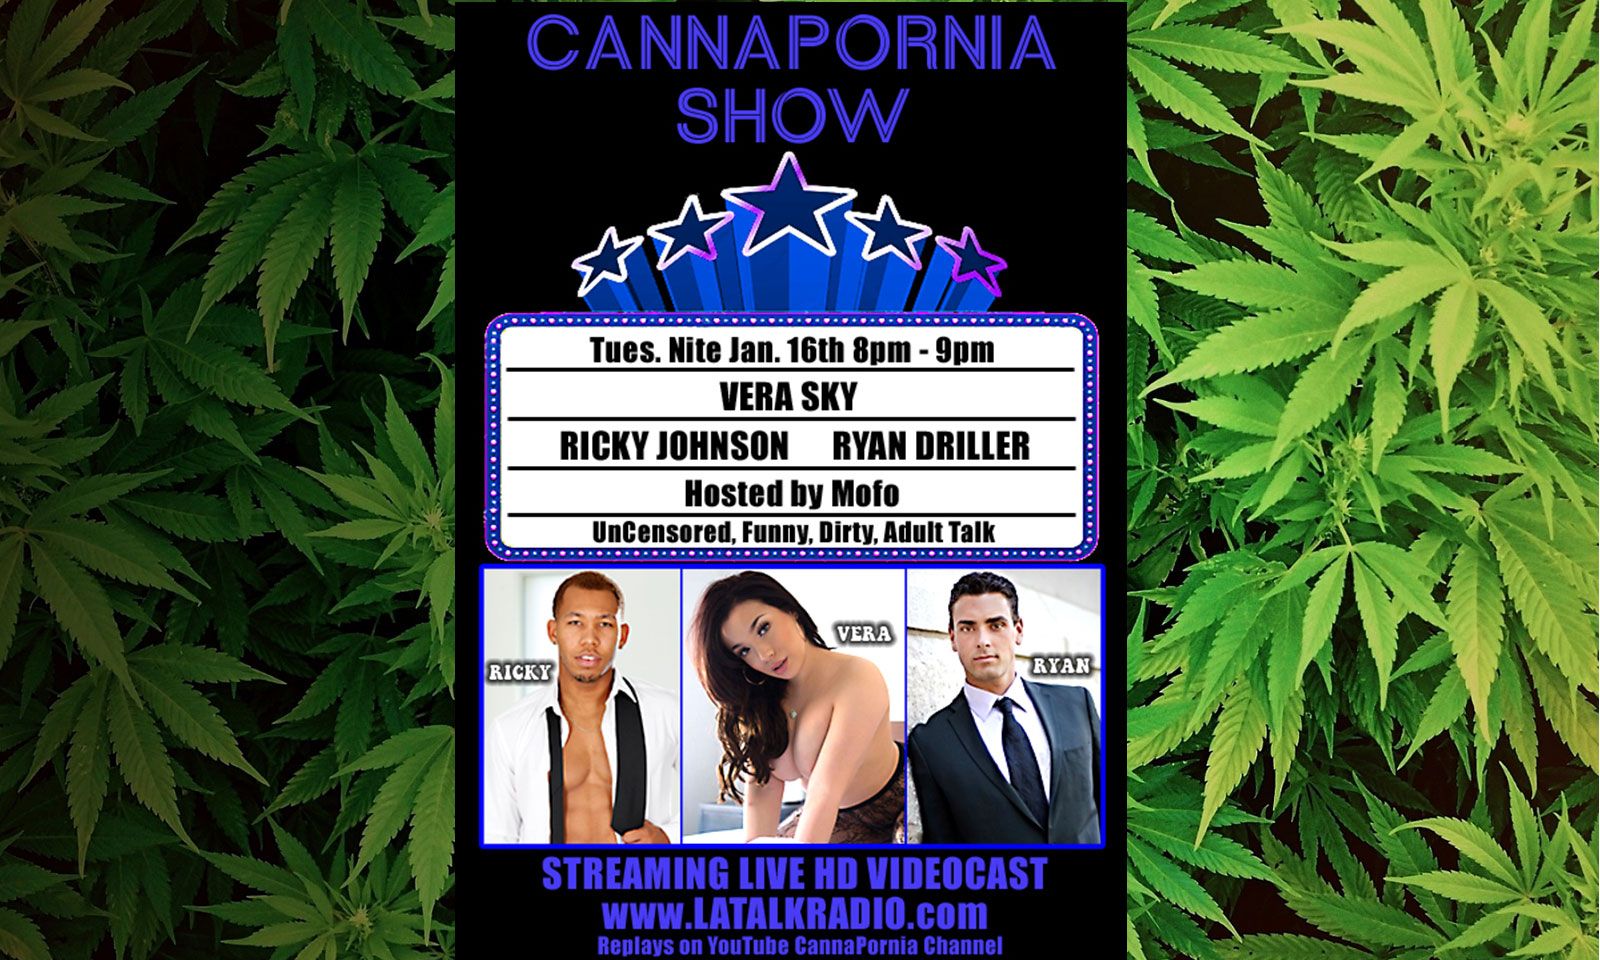 Ryan Driller & Ricky Johnson On CannaPornia Show Tonight